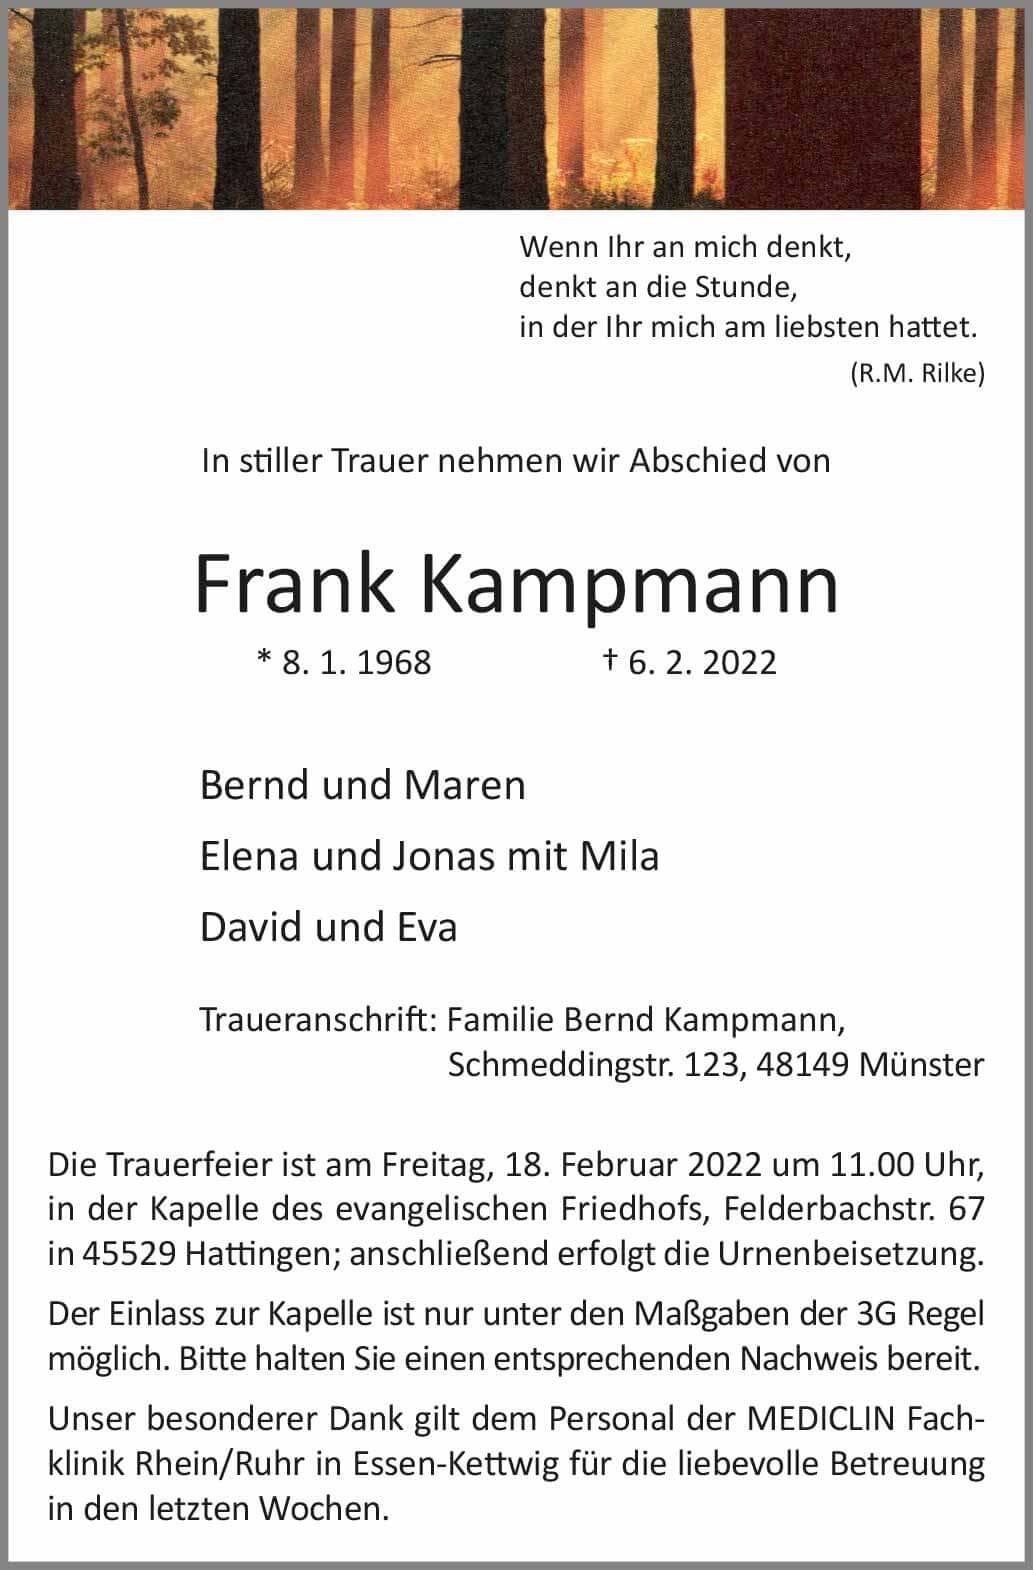 Frank Kampmann † 6. 2. 2022